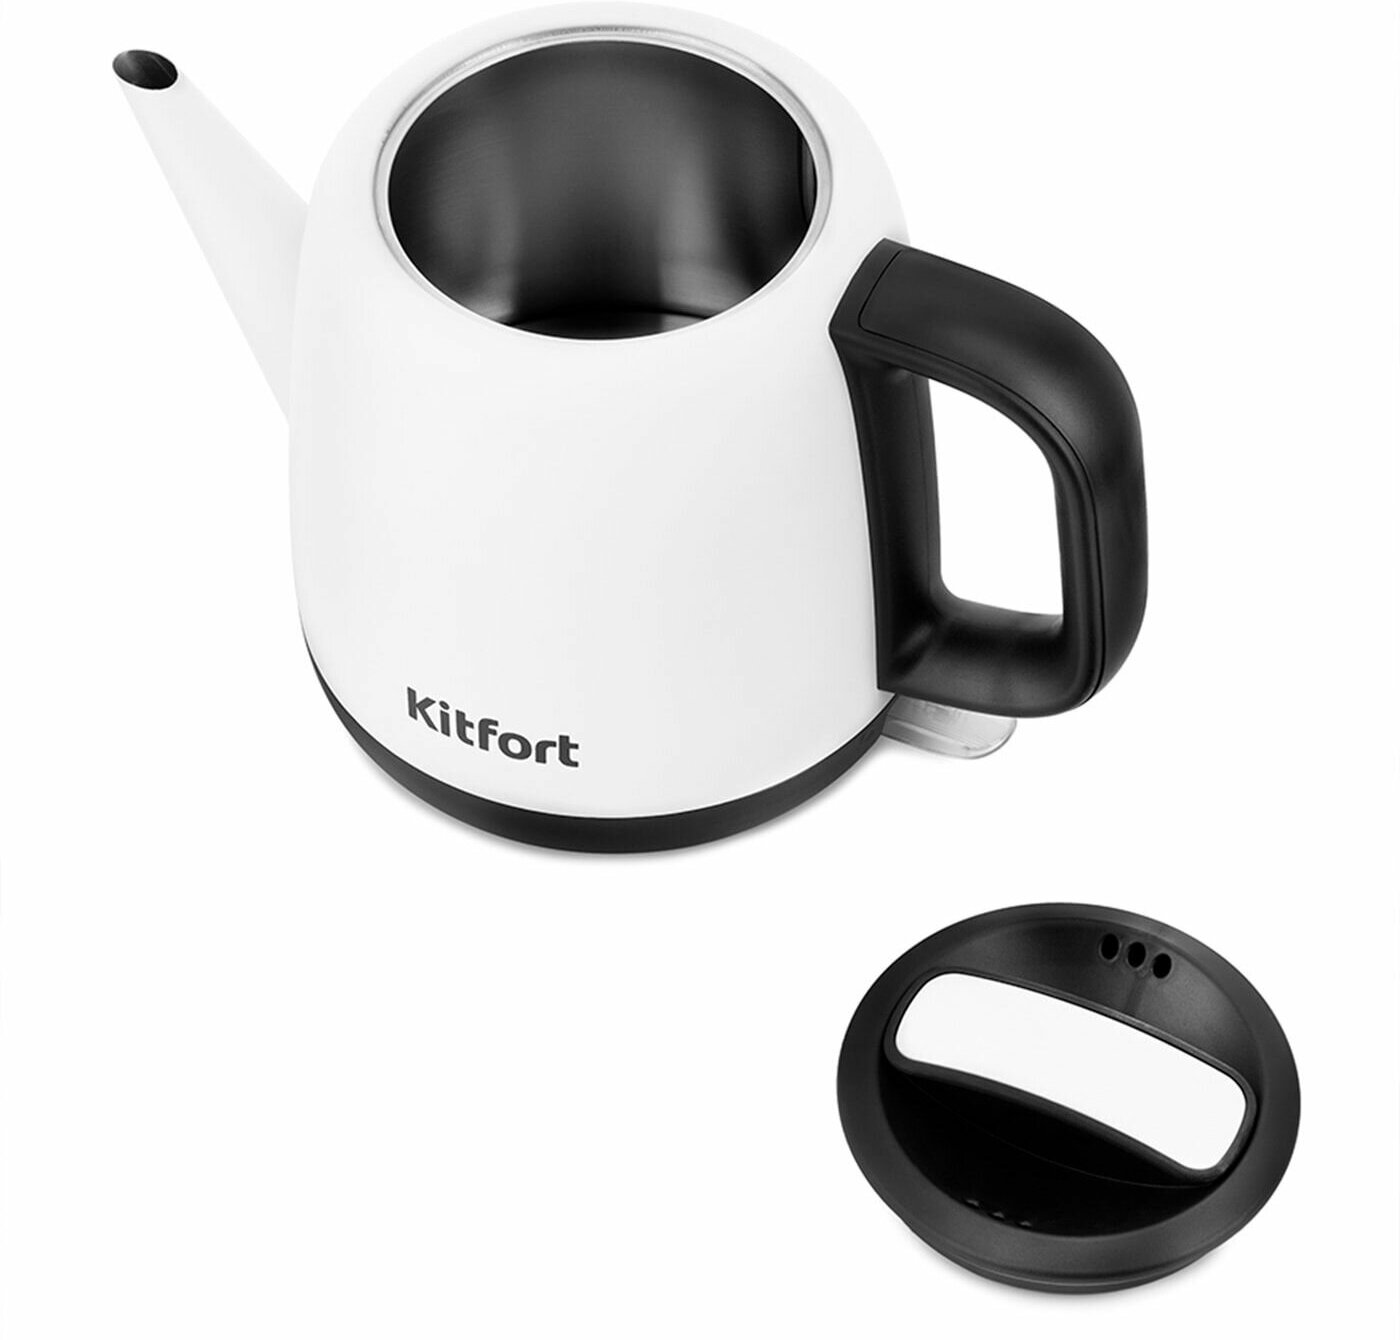 Чайник Kitfort KT-6112, белый